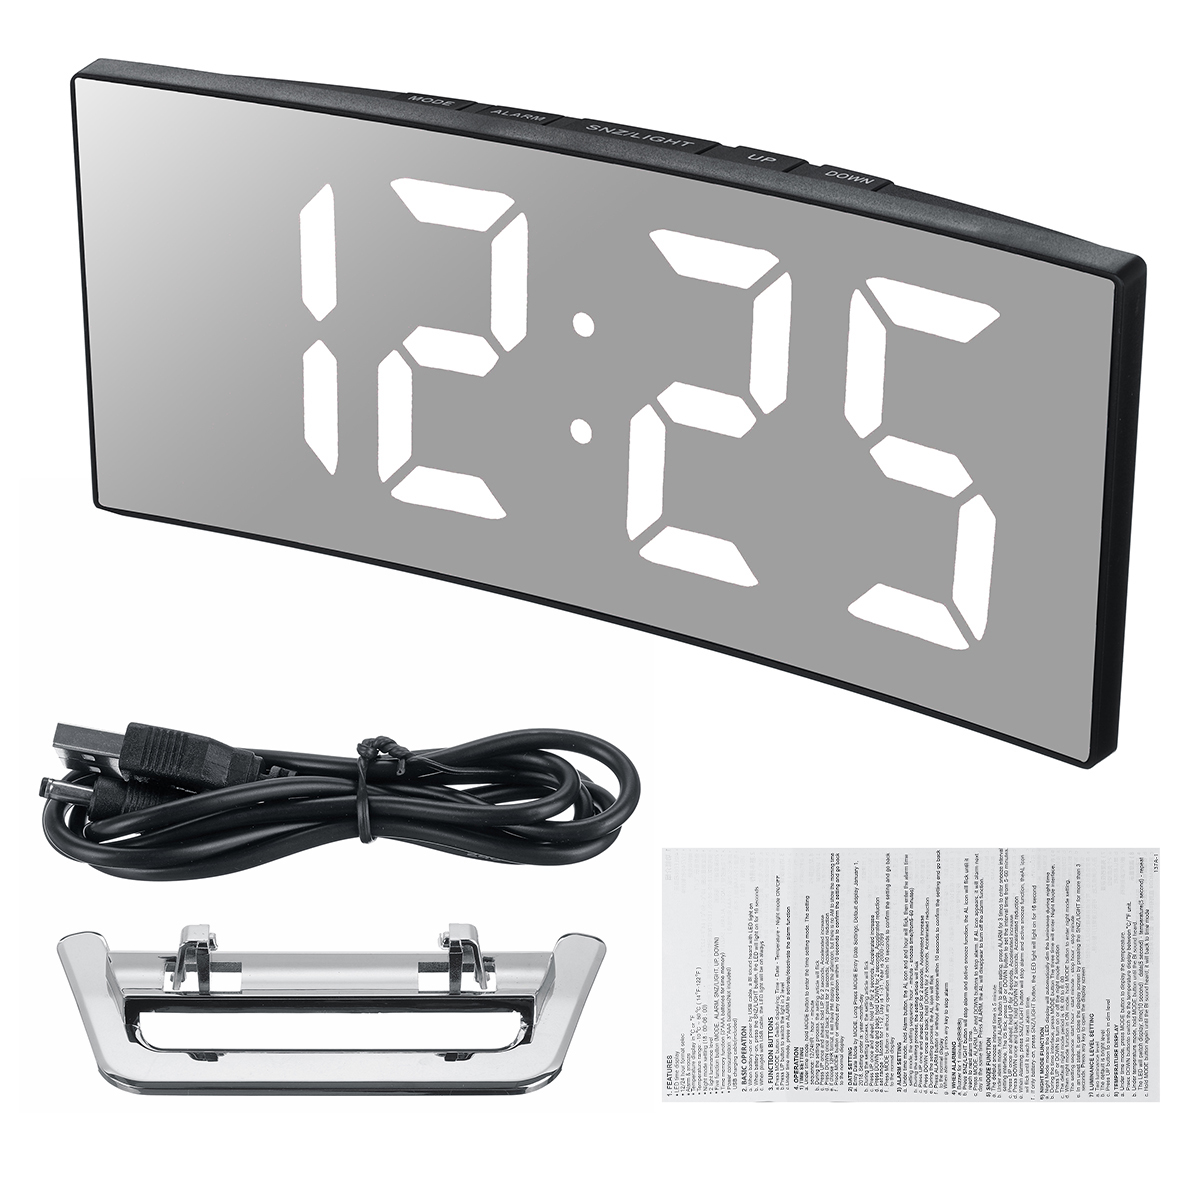 Curved-LED-Digital-Alarm-Clock-Mirror-Table-Display-Temperature-Snooze-USB-Room-1639017-6